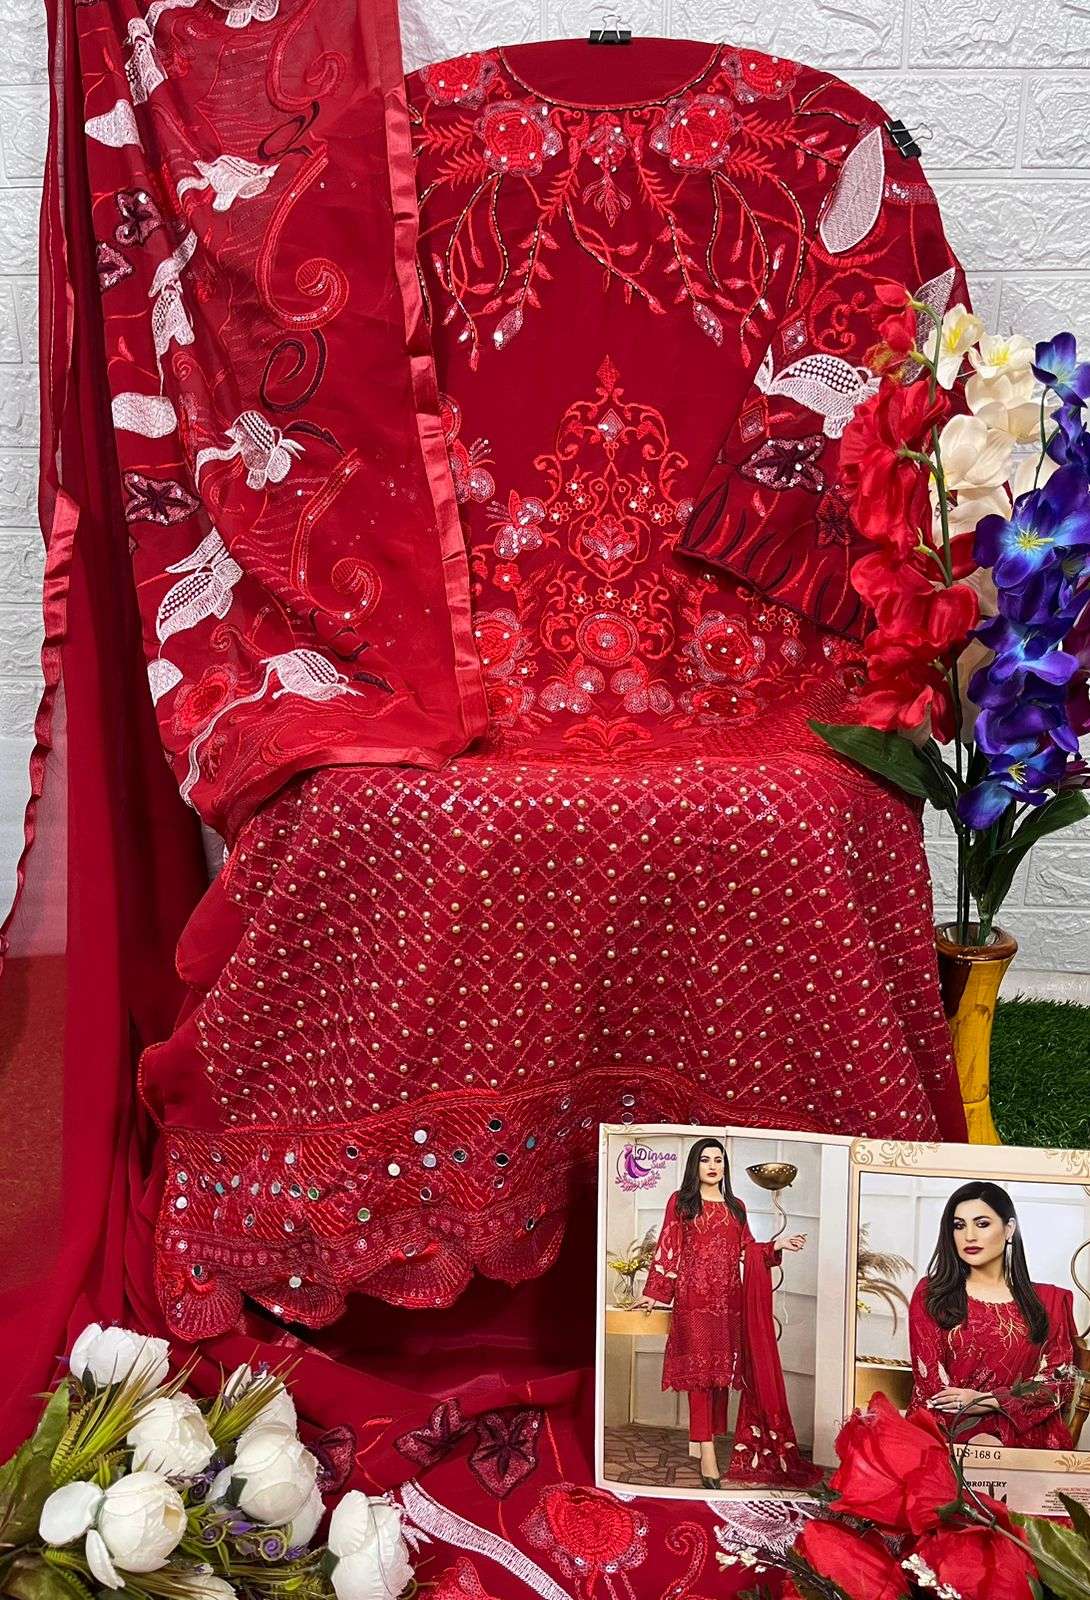 dinsaa suit 168 series faux georgette designer pakistani salwar kameez collection wholesaler surat 